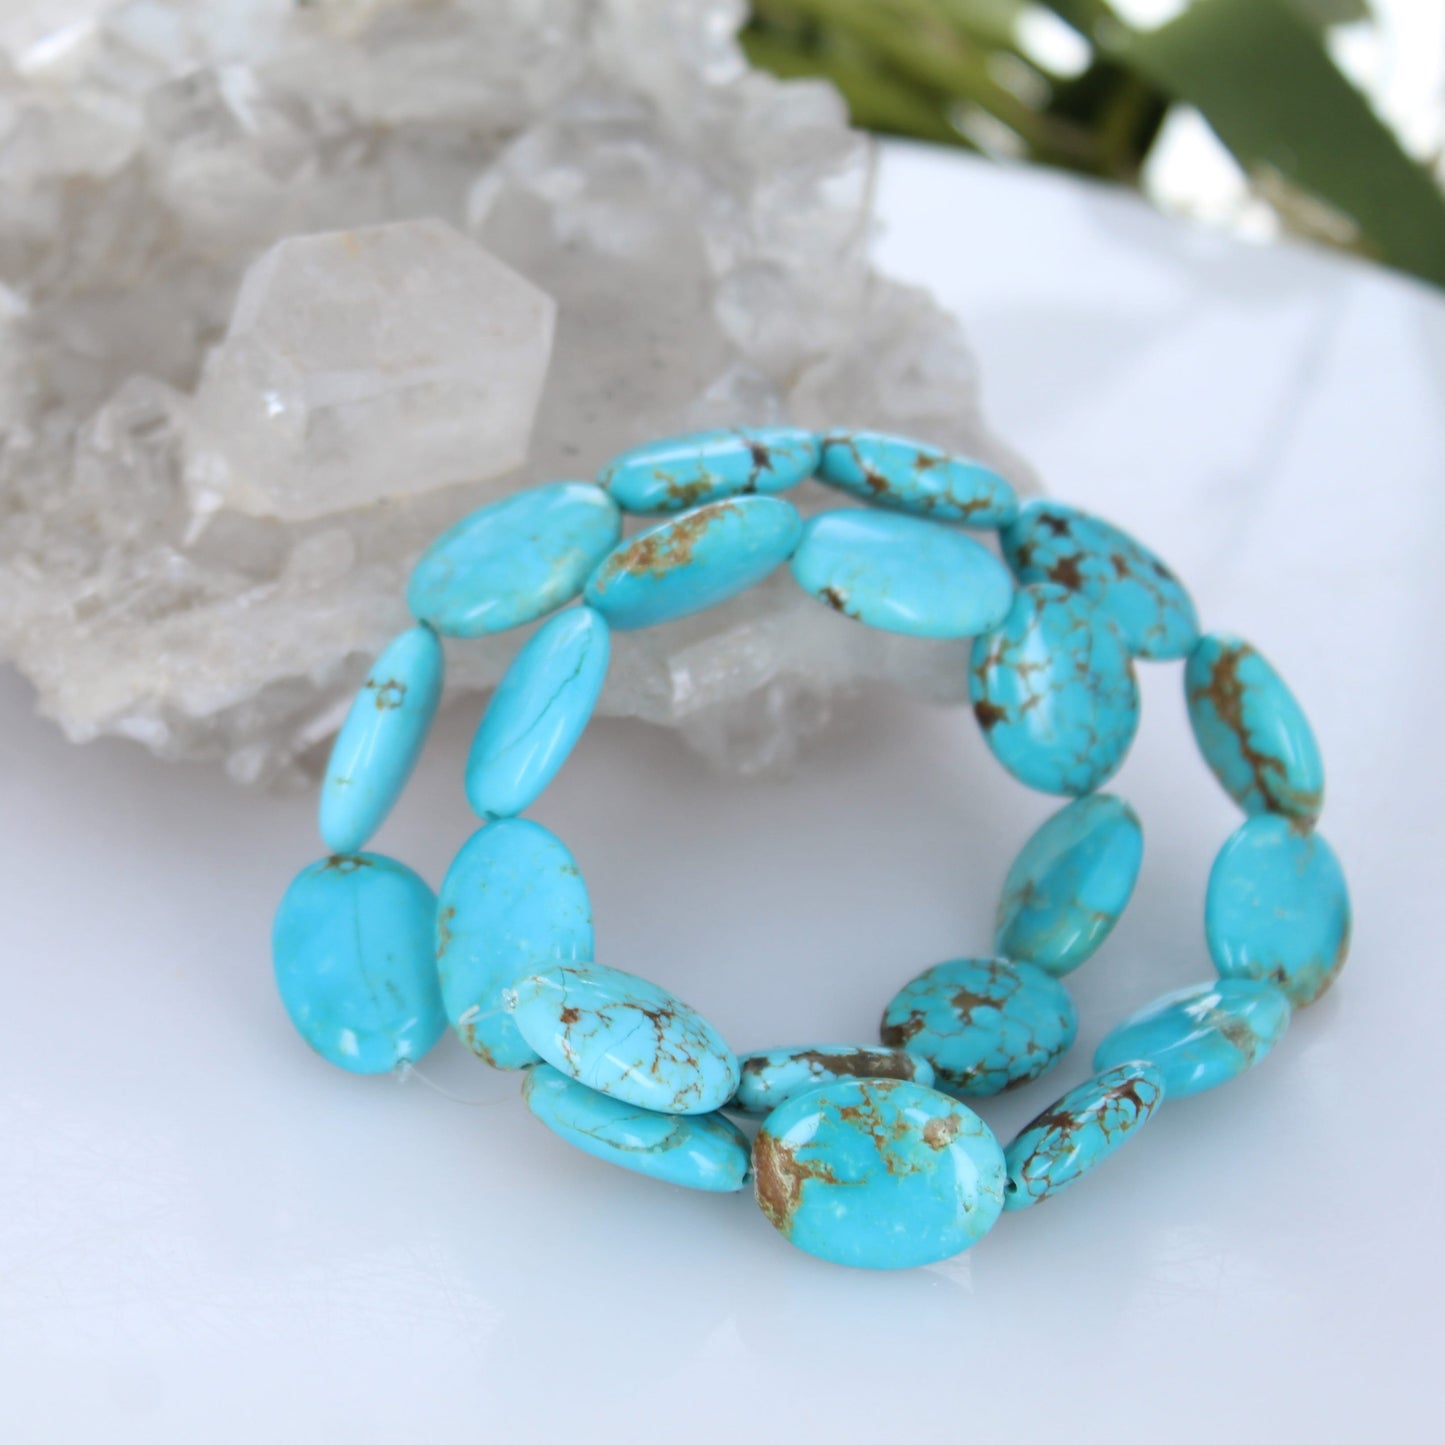 AAA Nevada #8 Mine Turquoise Beads 20x15mm Ovals